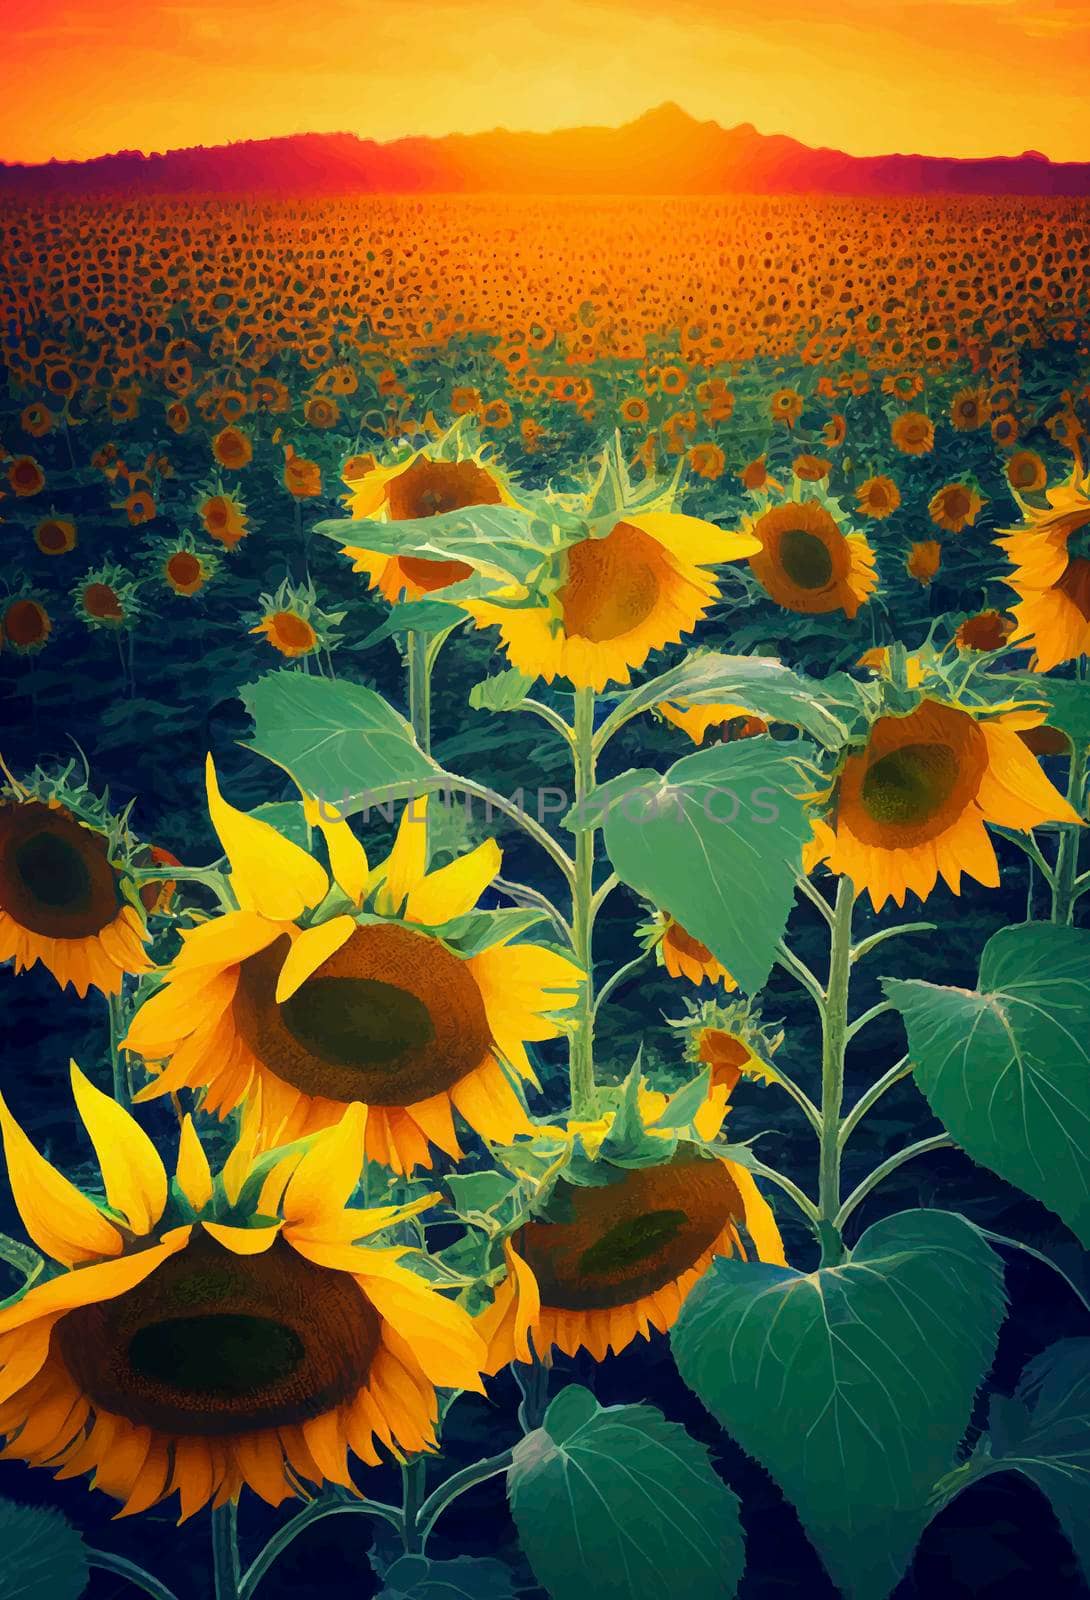 sunflowers under the colorful sky. Beautiful sunflower field. by JpRamos